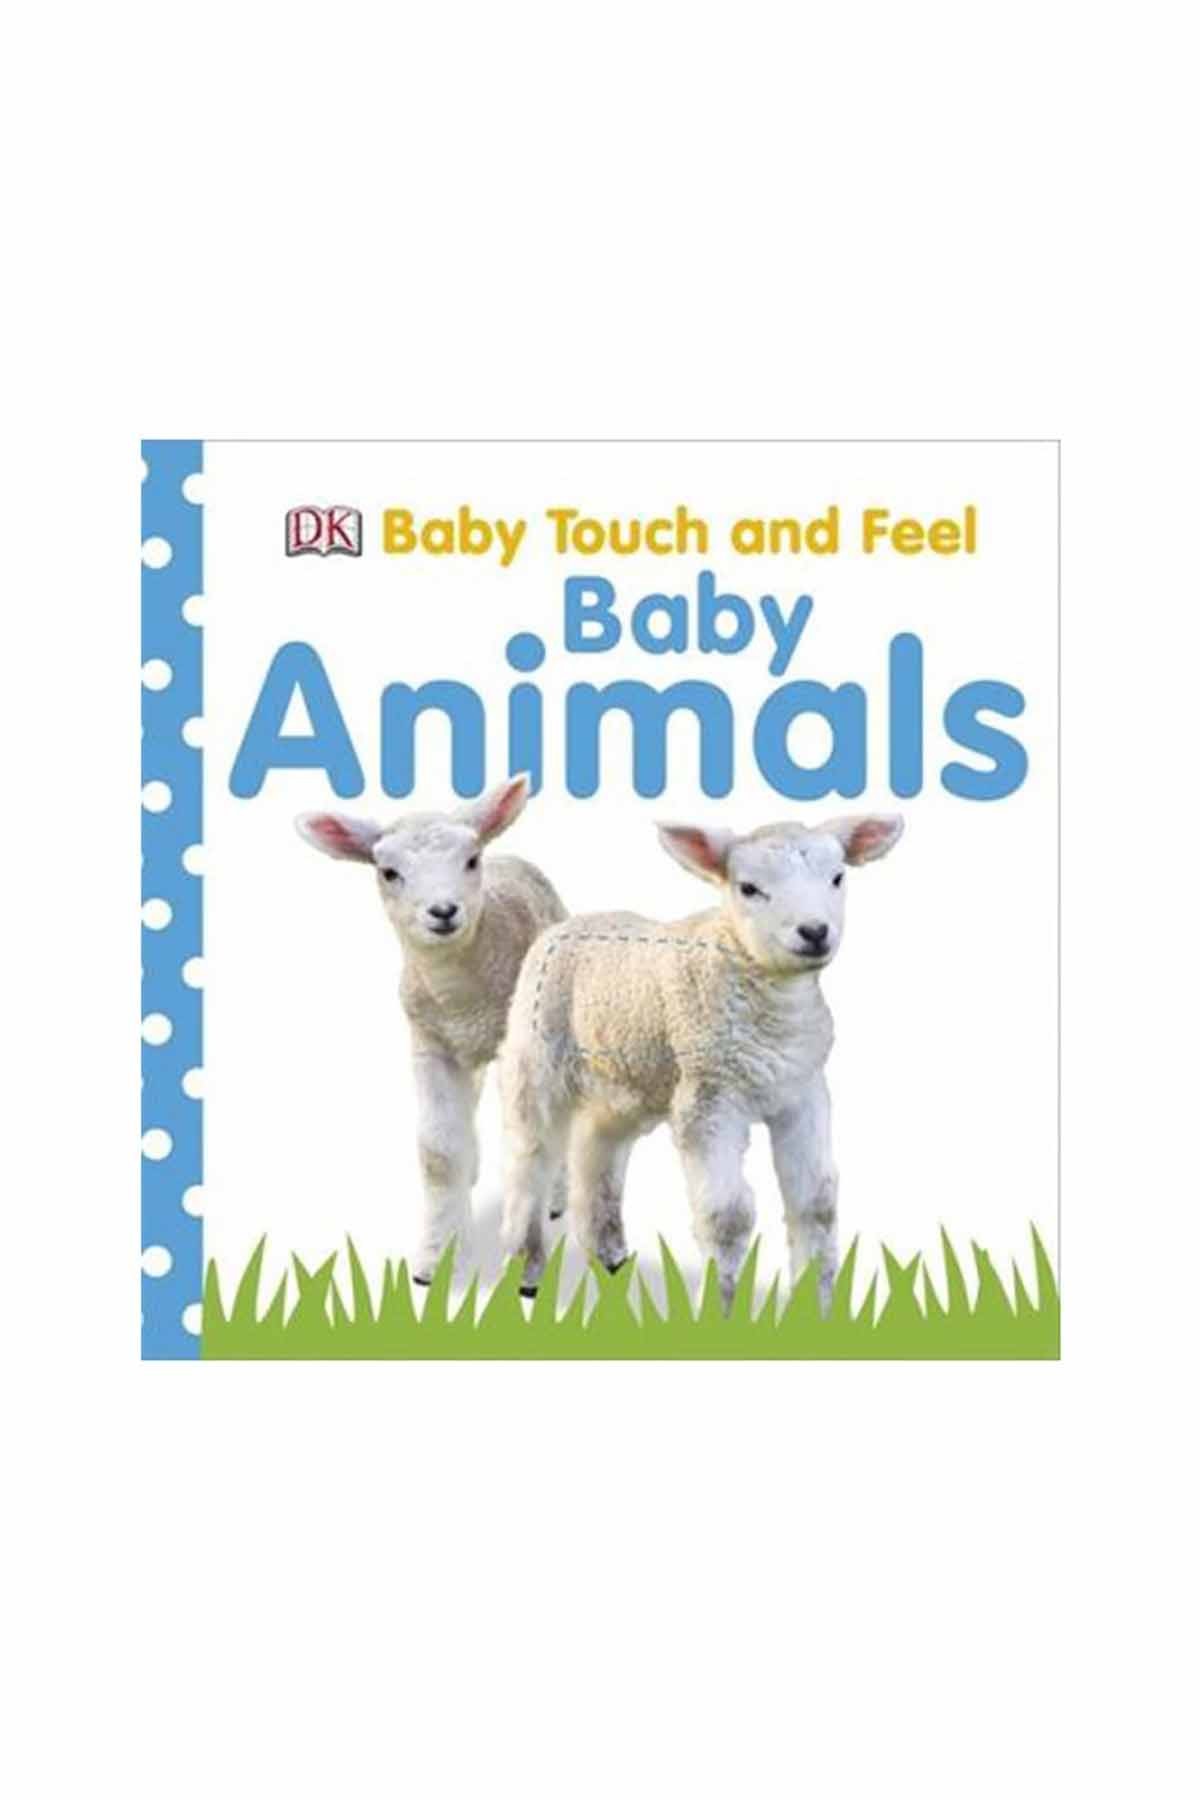 DK Yayıncılık Baby Touch and Feel Baby Animals